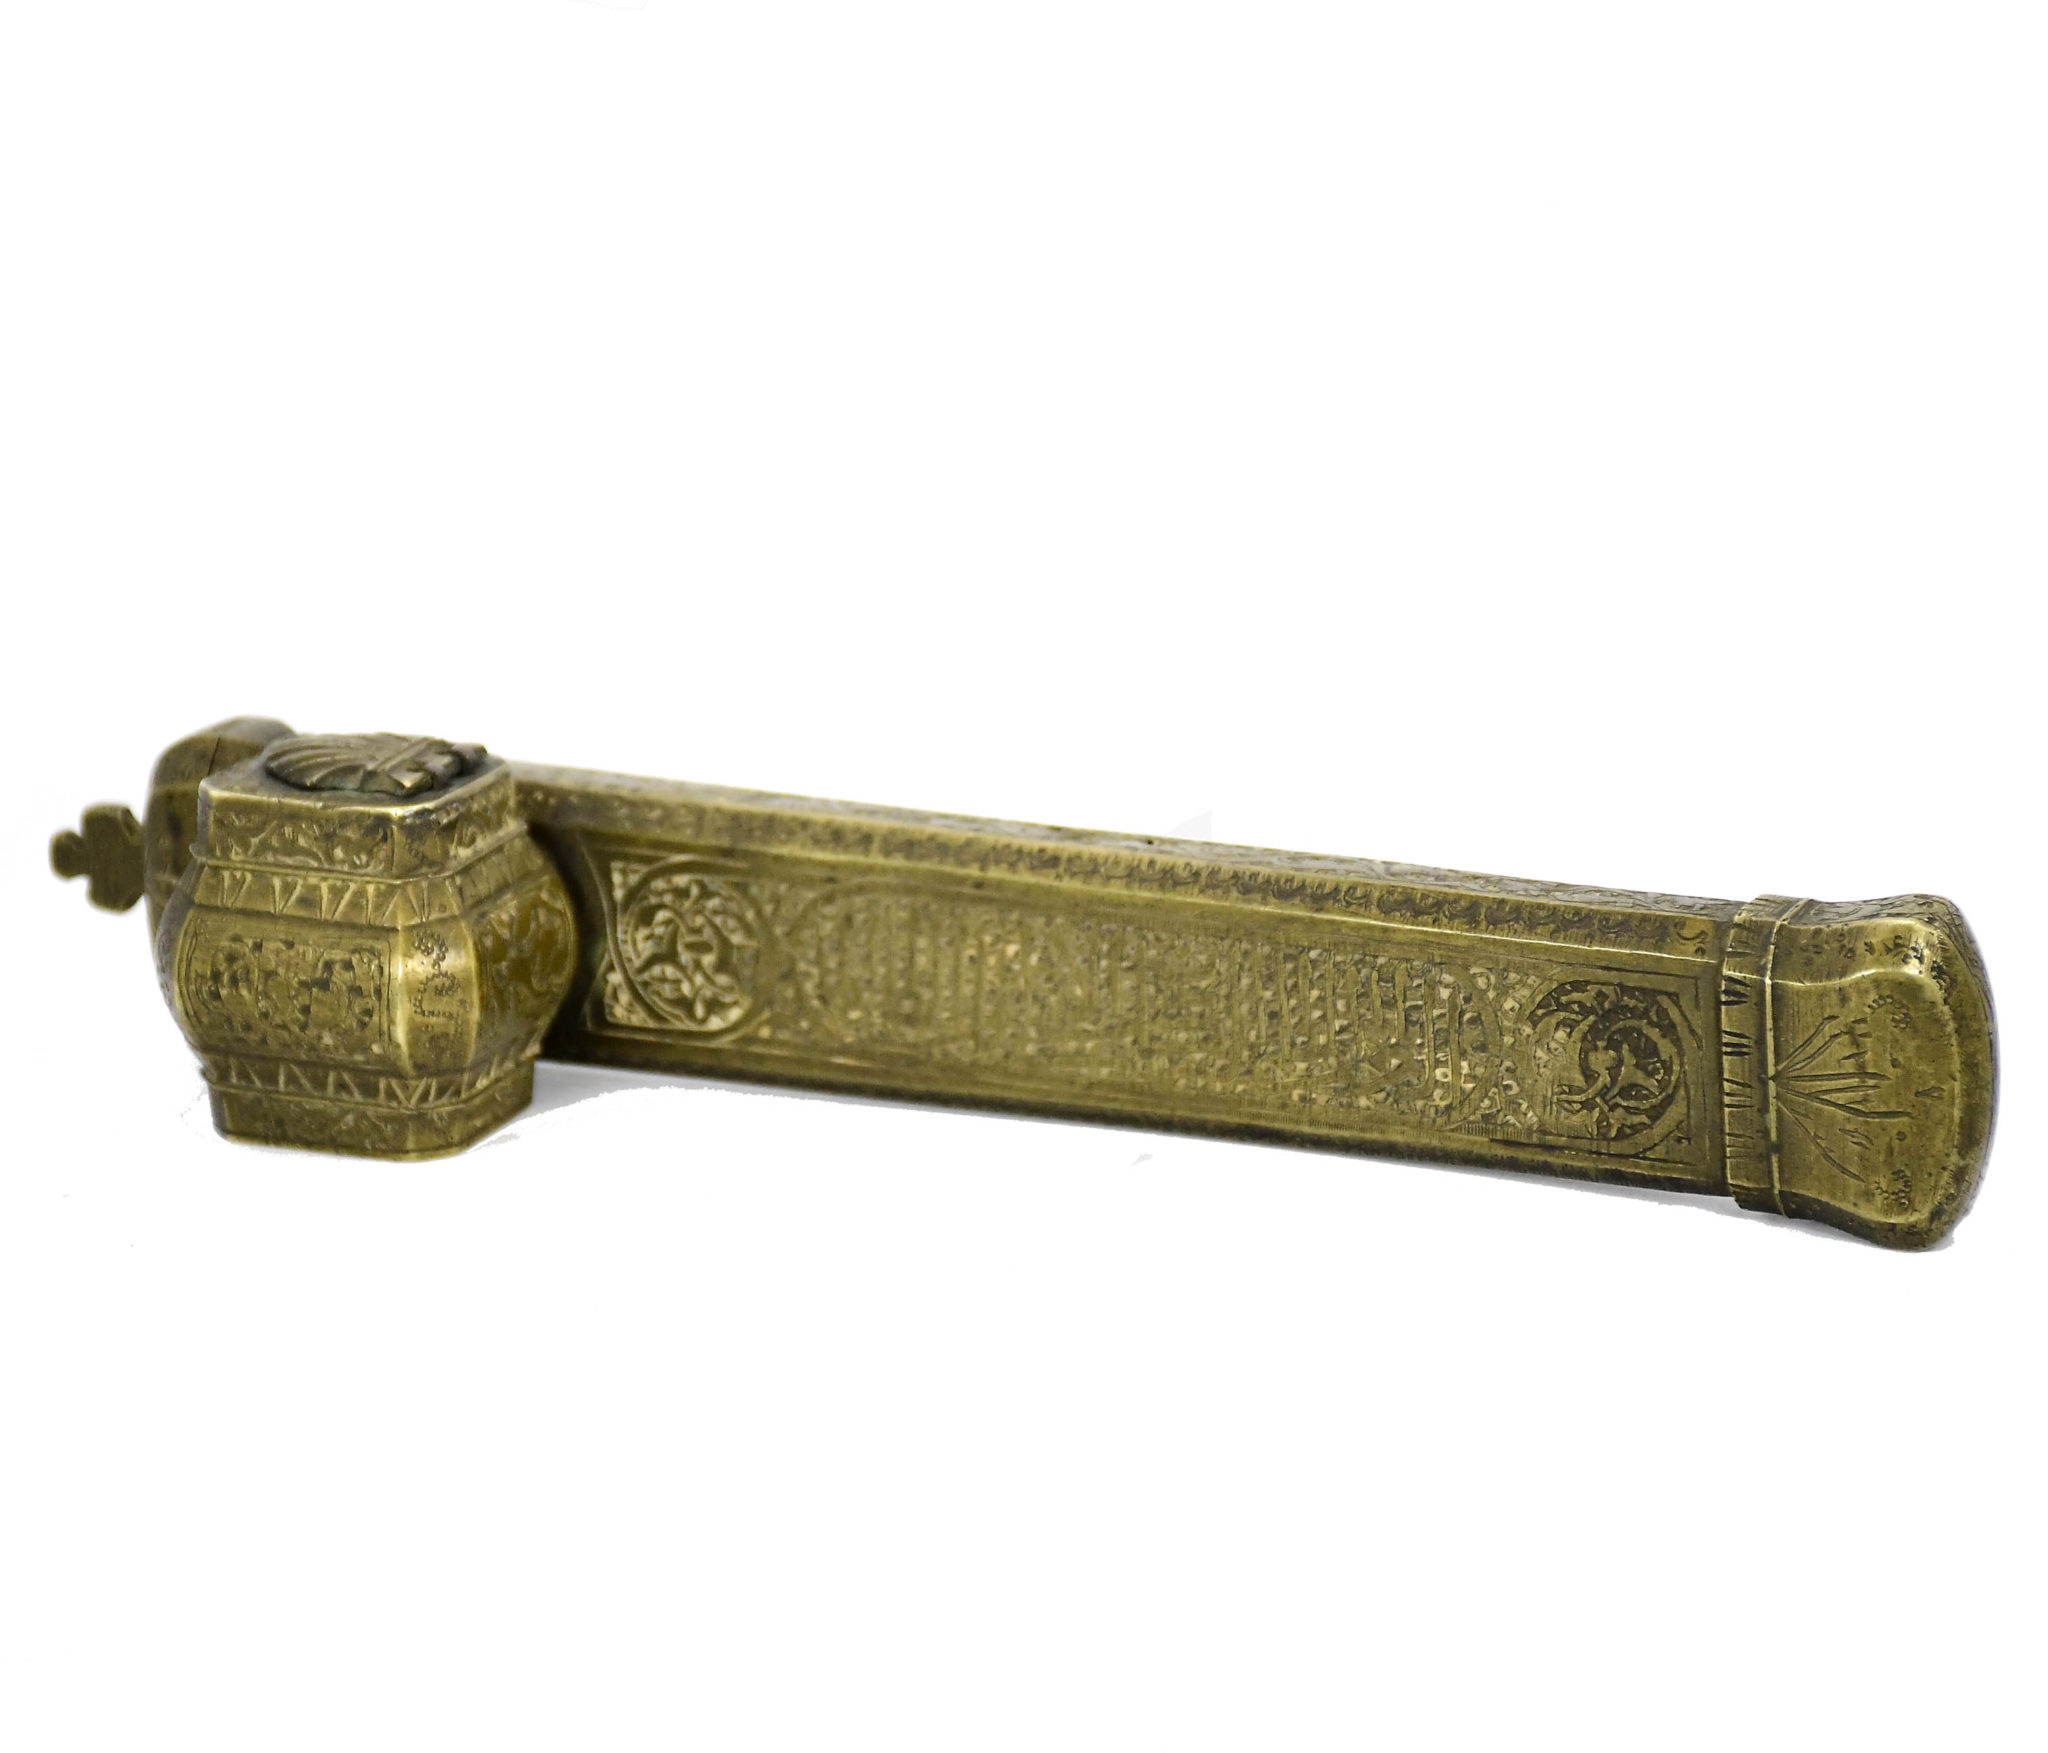 A Very Fine 19th Century Ottoman Brass Qalamdan Divit Traveling Inkwell Pen Case